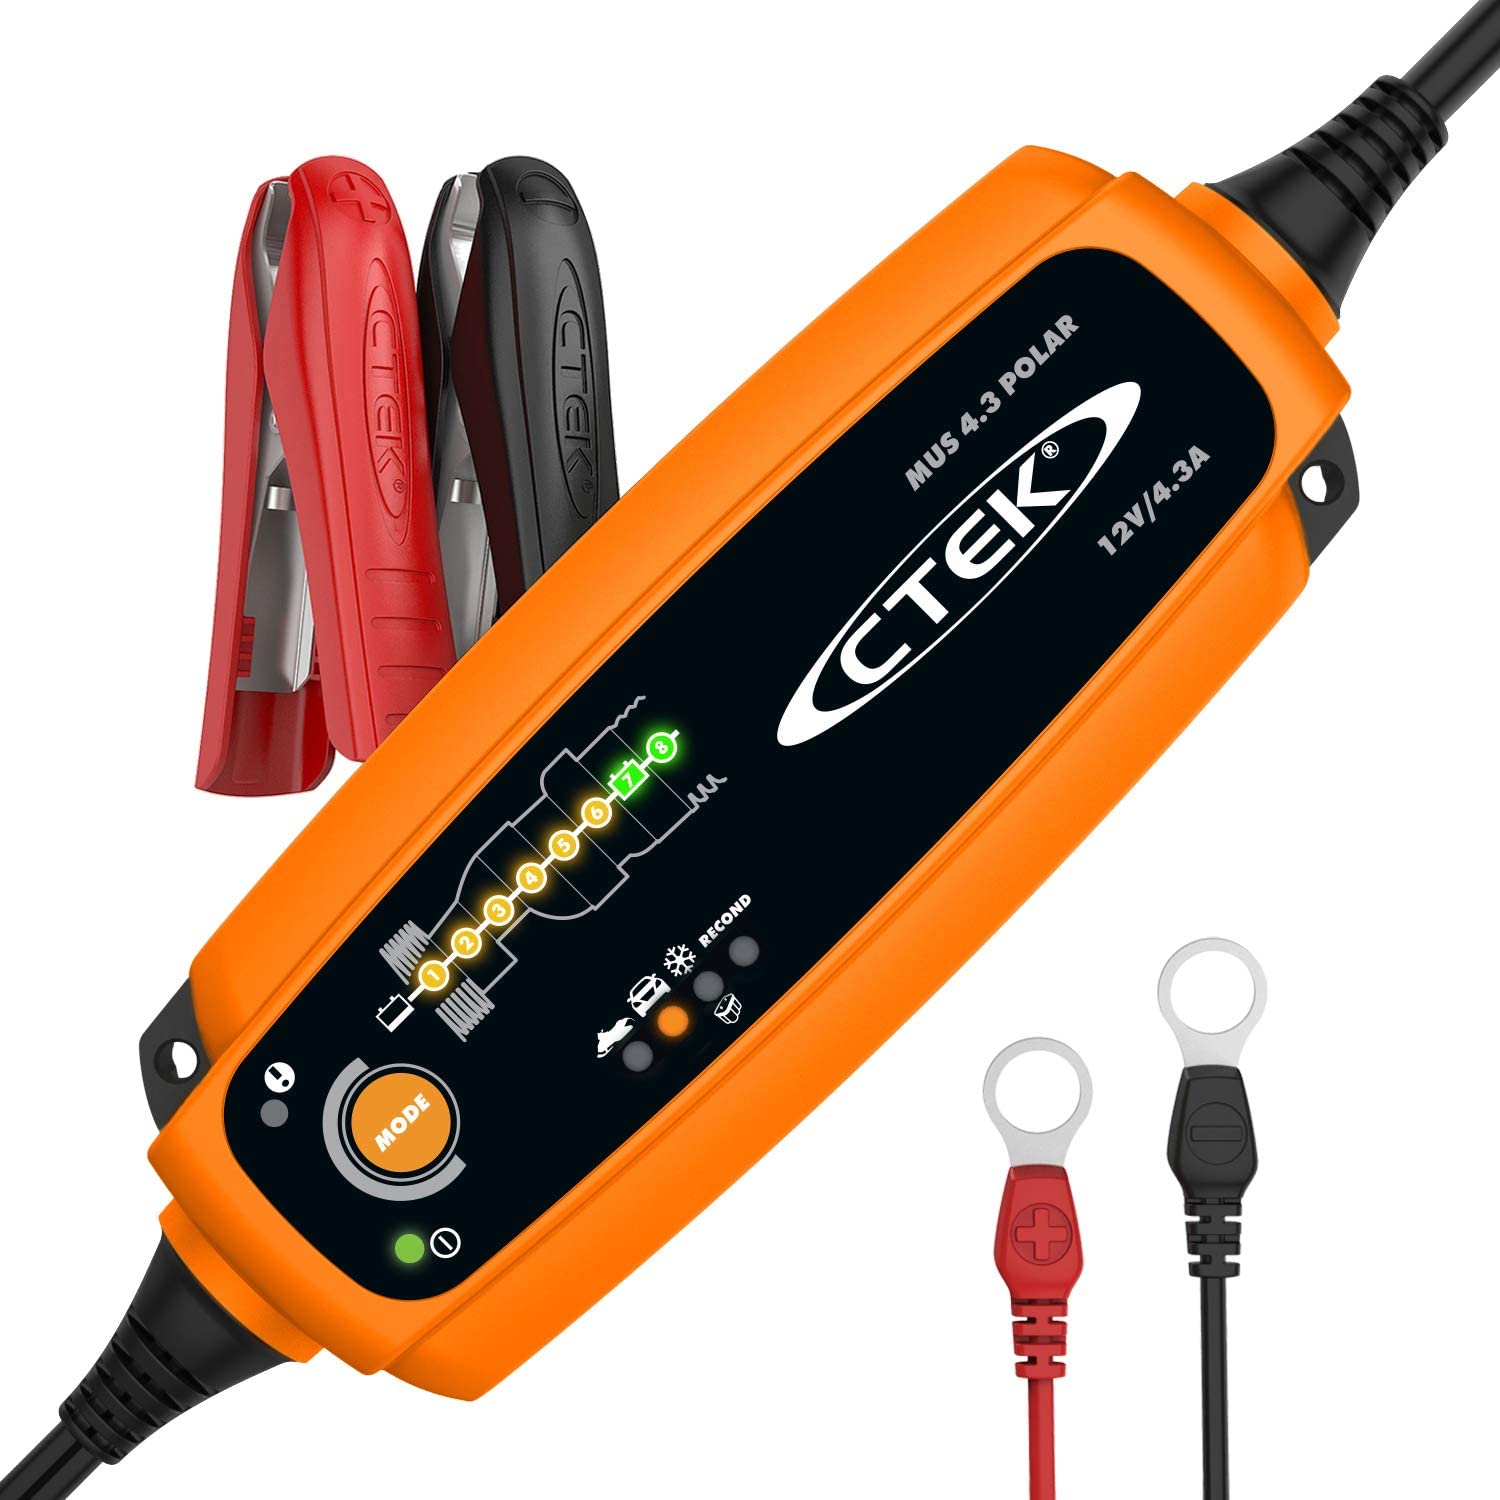 Batterie-Ladegerät CTEK 6 Programme, 8 Ladeschritte MXS 5.0, 12V, 5A mit  Polklemmen & Ringösenkabel auch für Gel-Batterien geeignet Note 1 -  perfekte Reparatur